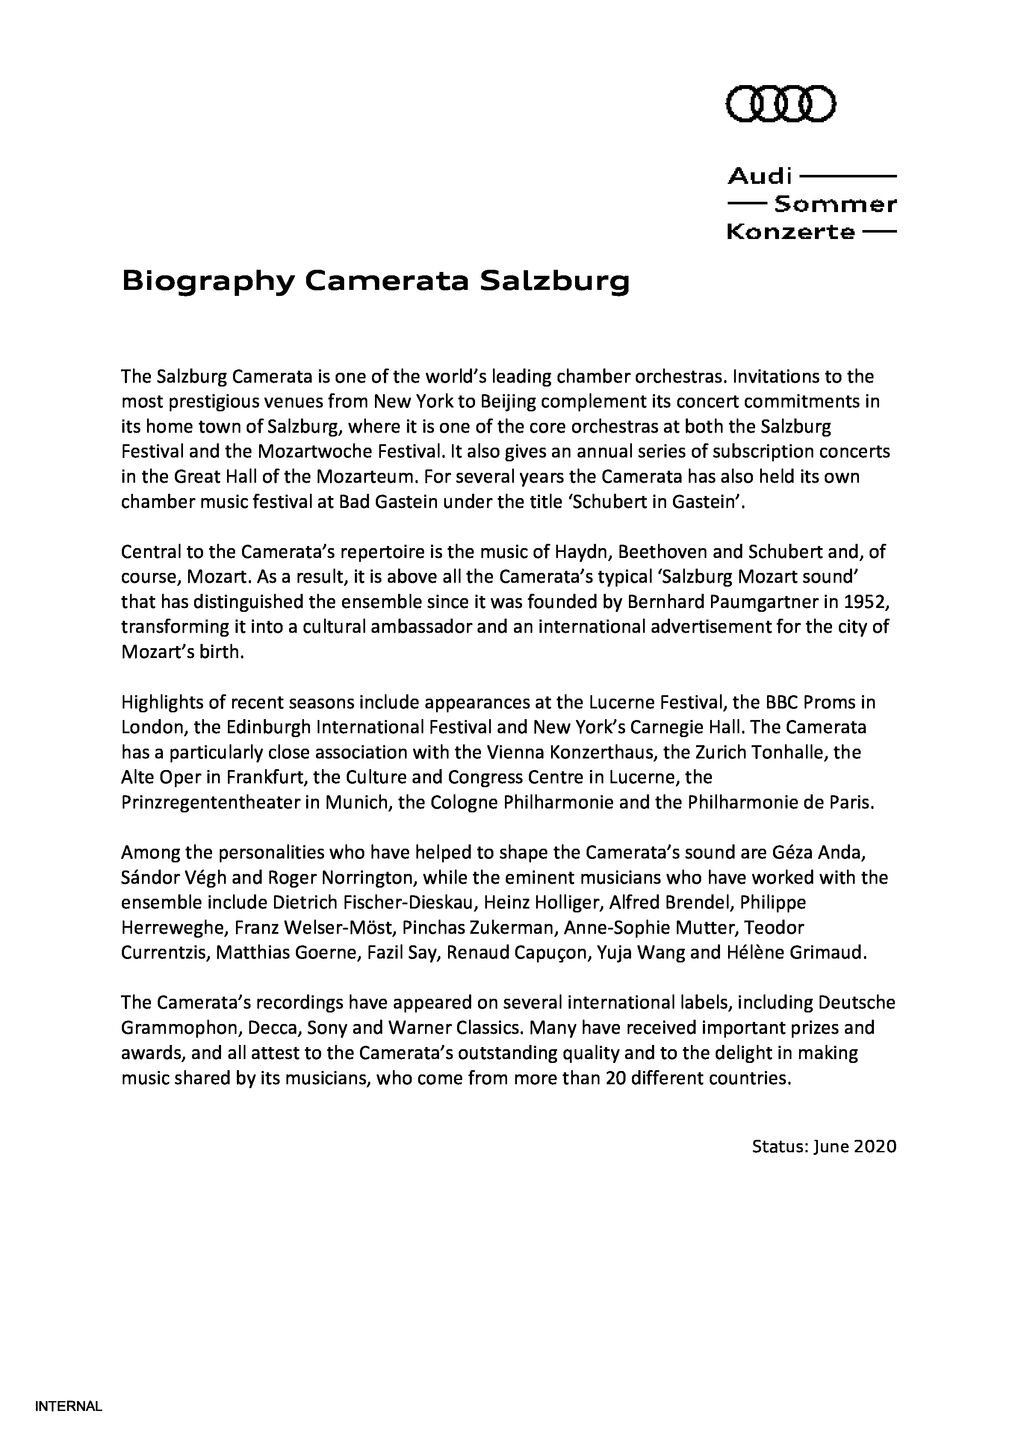 Biography Camerata Salzburg